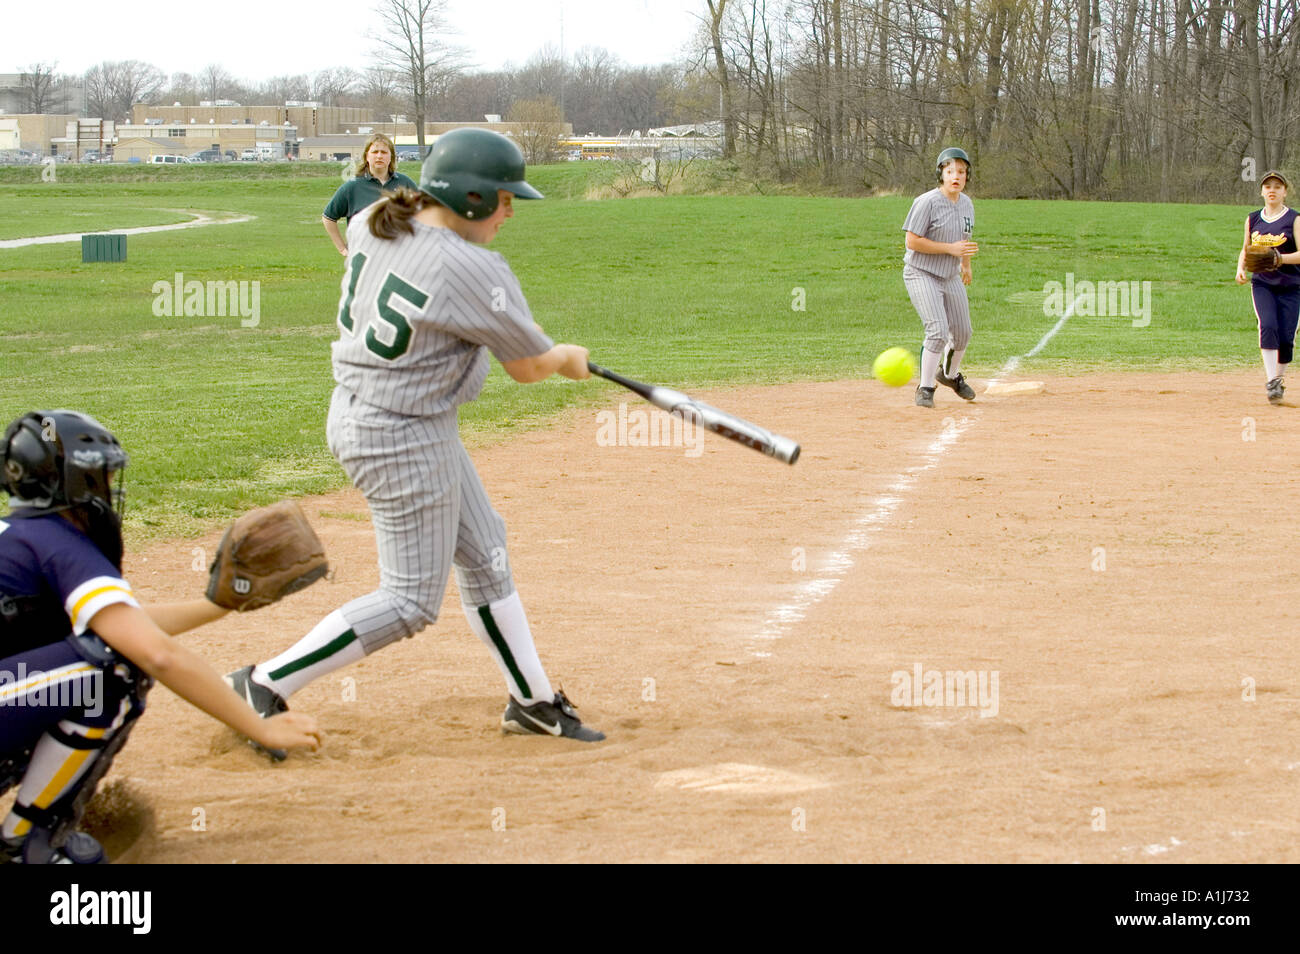 Baseball Softball action Female 12 to 14 year old girls Stock Photo